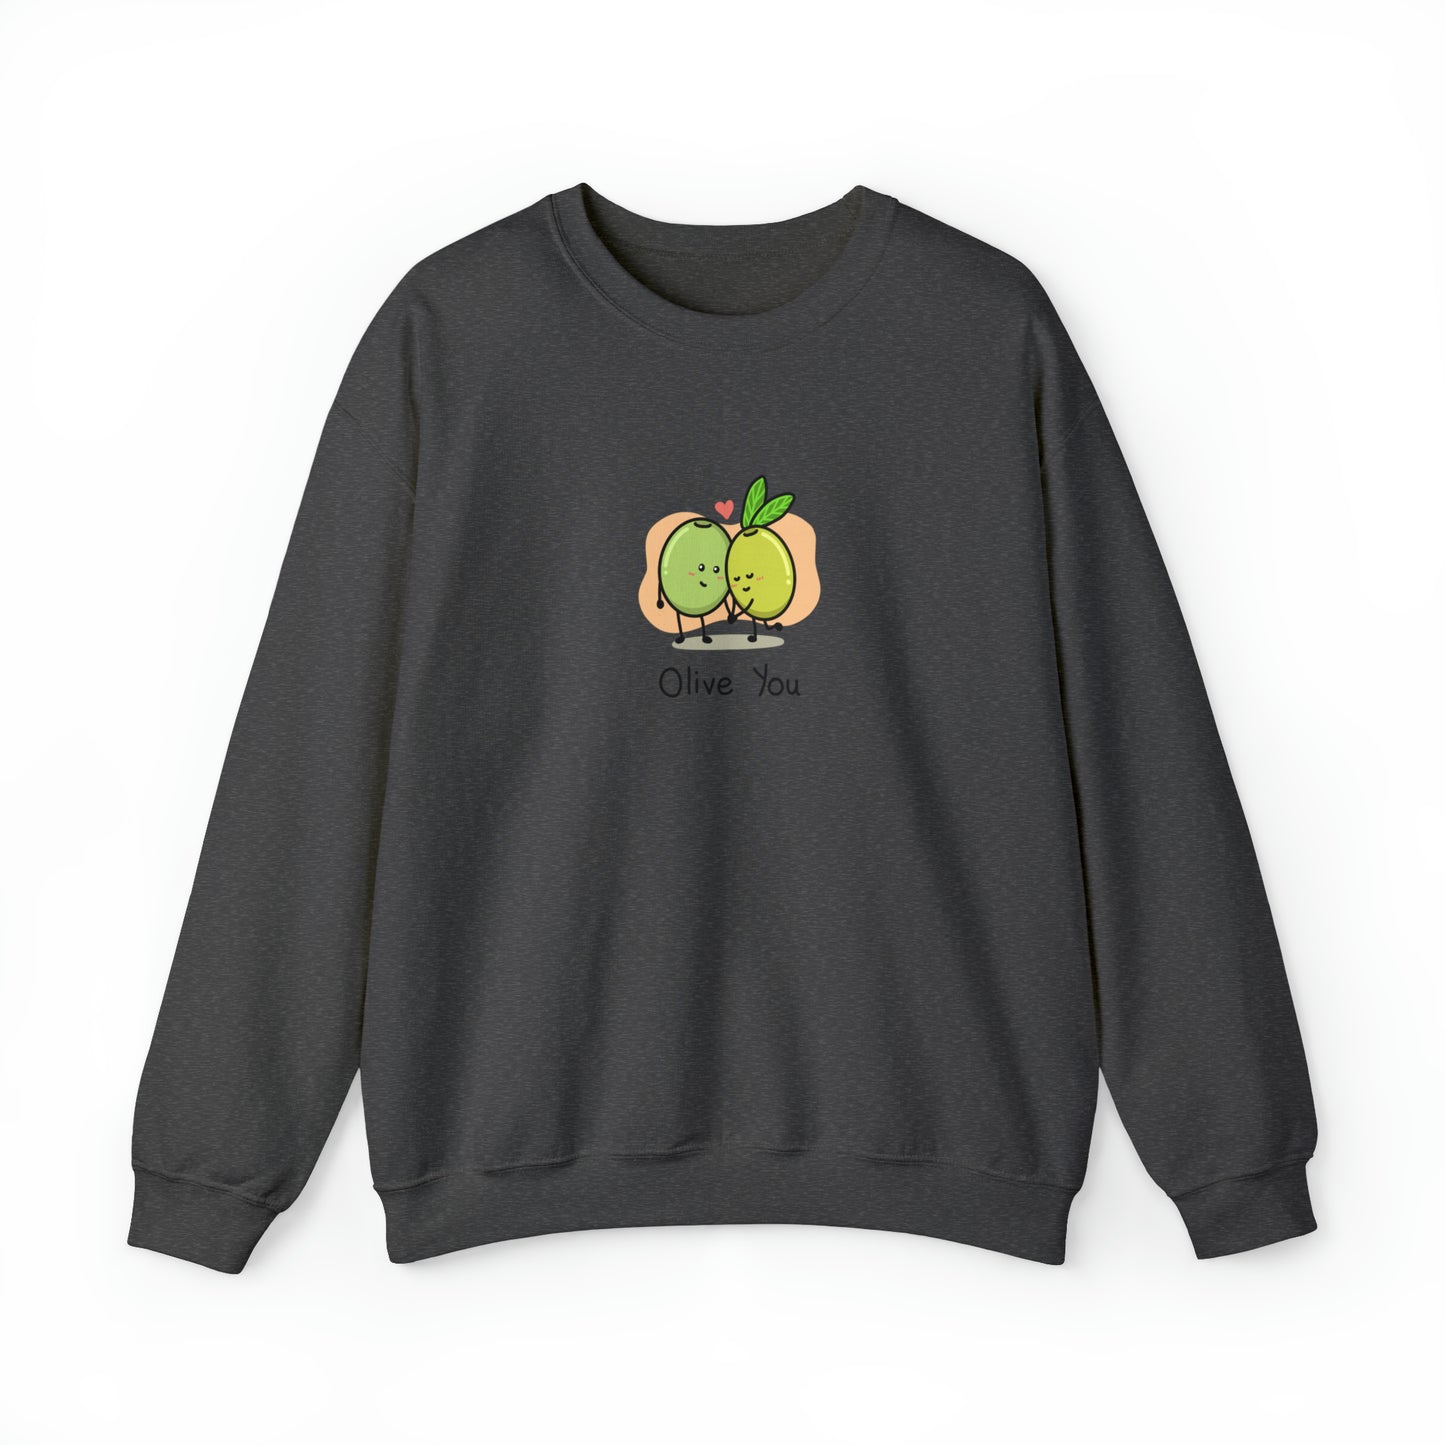 Custom Parody Crewneck Sweatshirt, Olive you Design